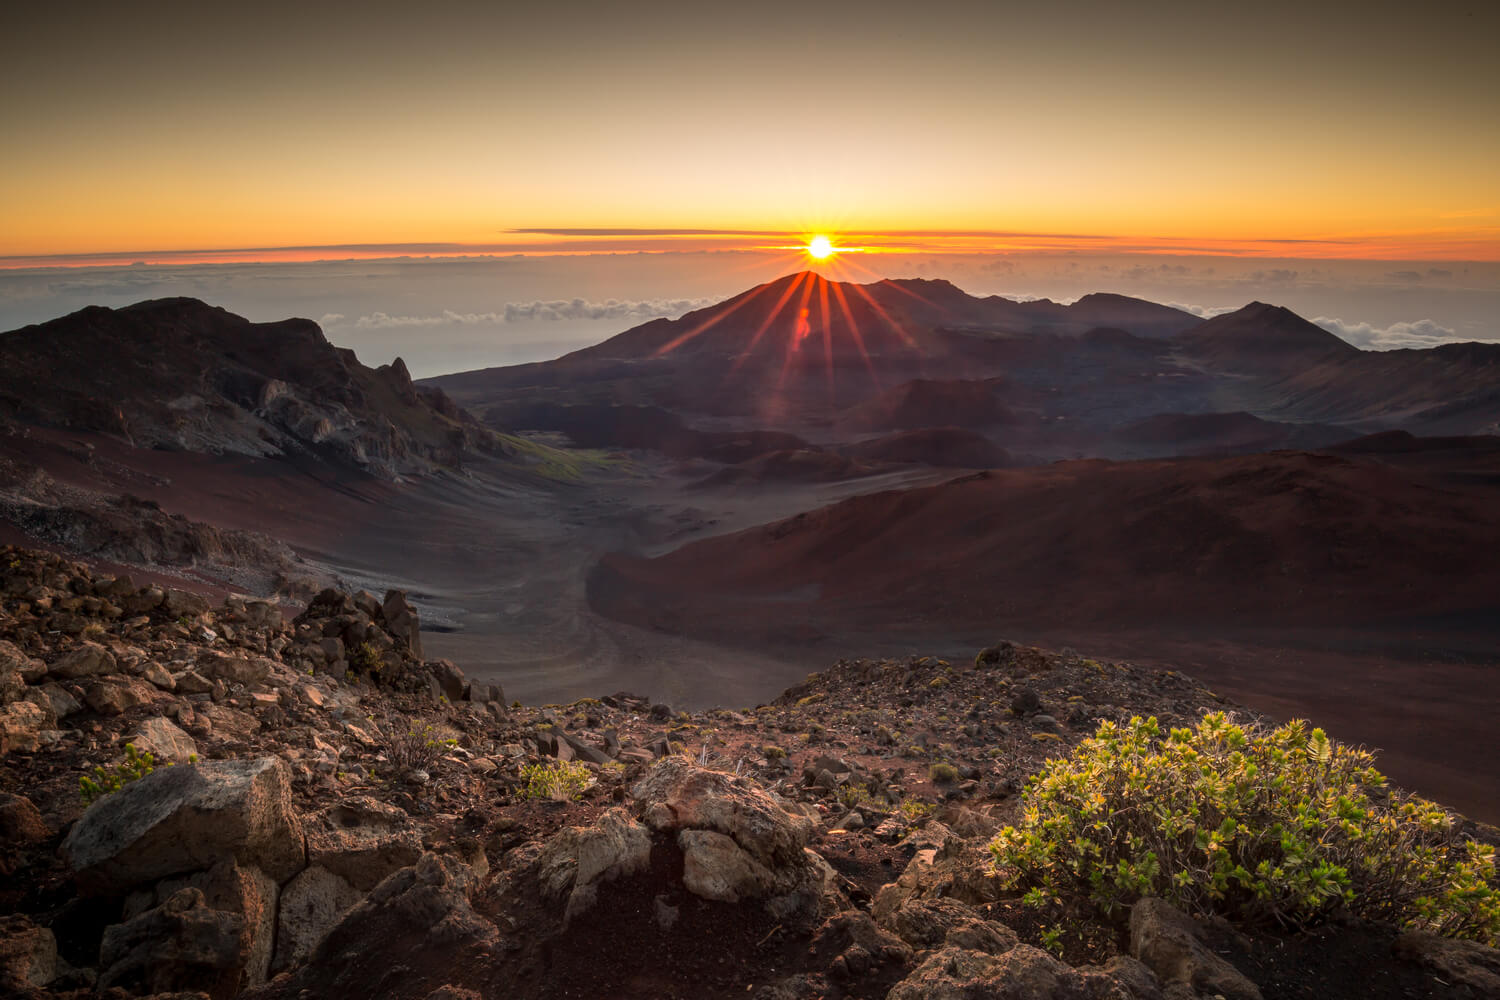 A stunning look at the sunset at Haleakala National Park.